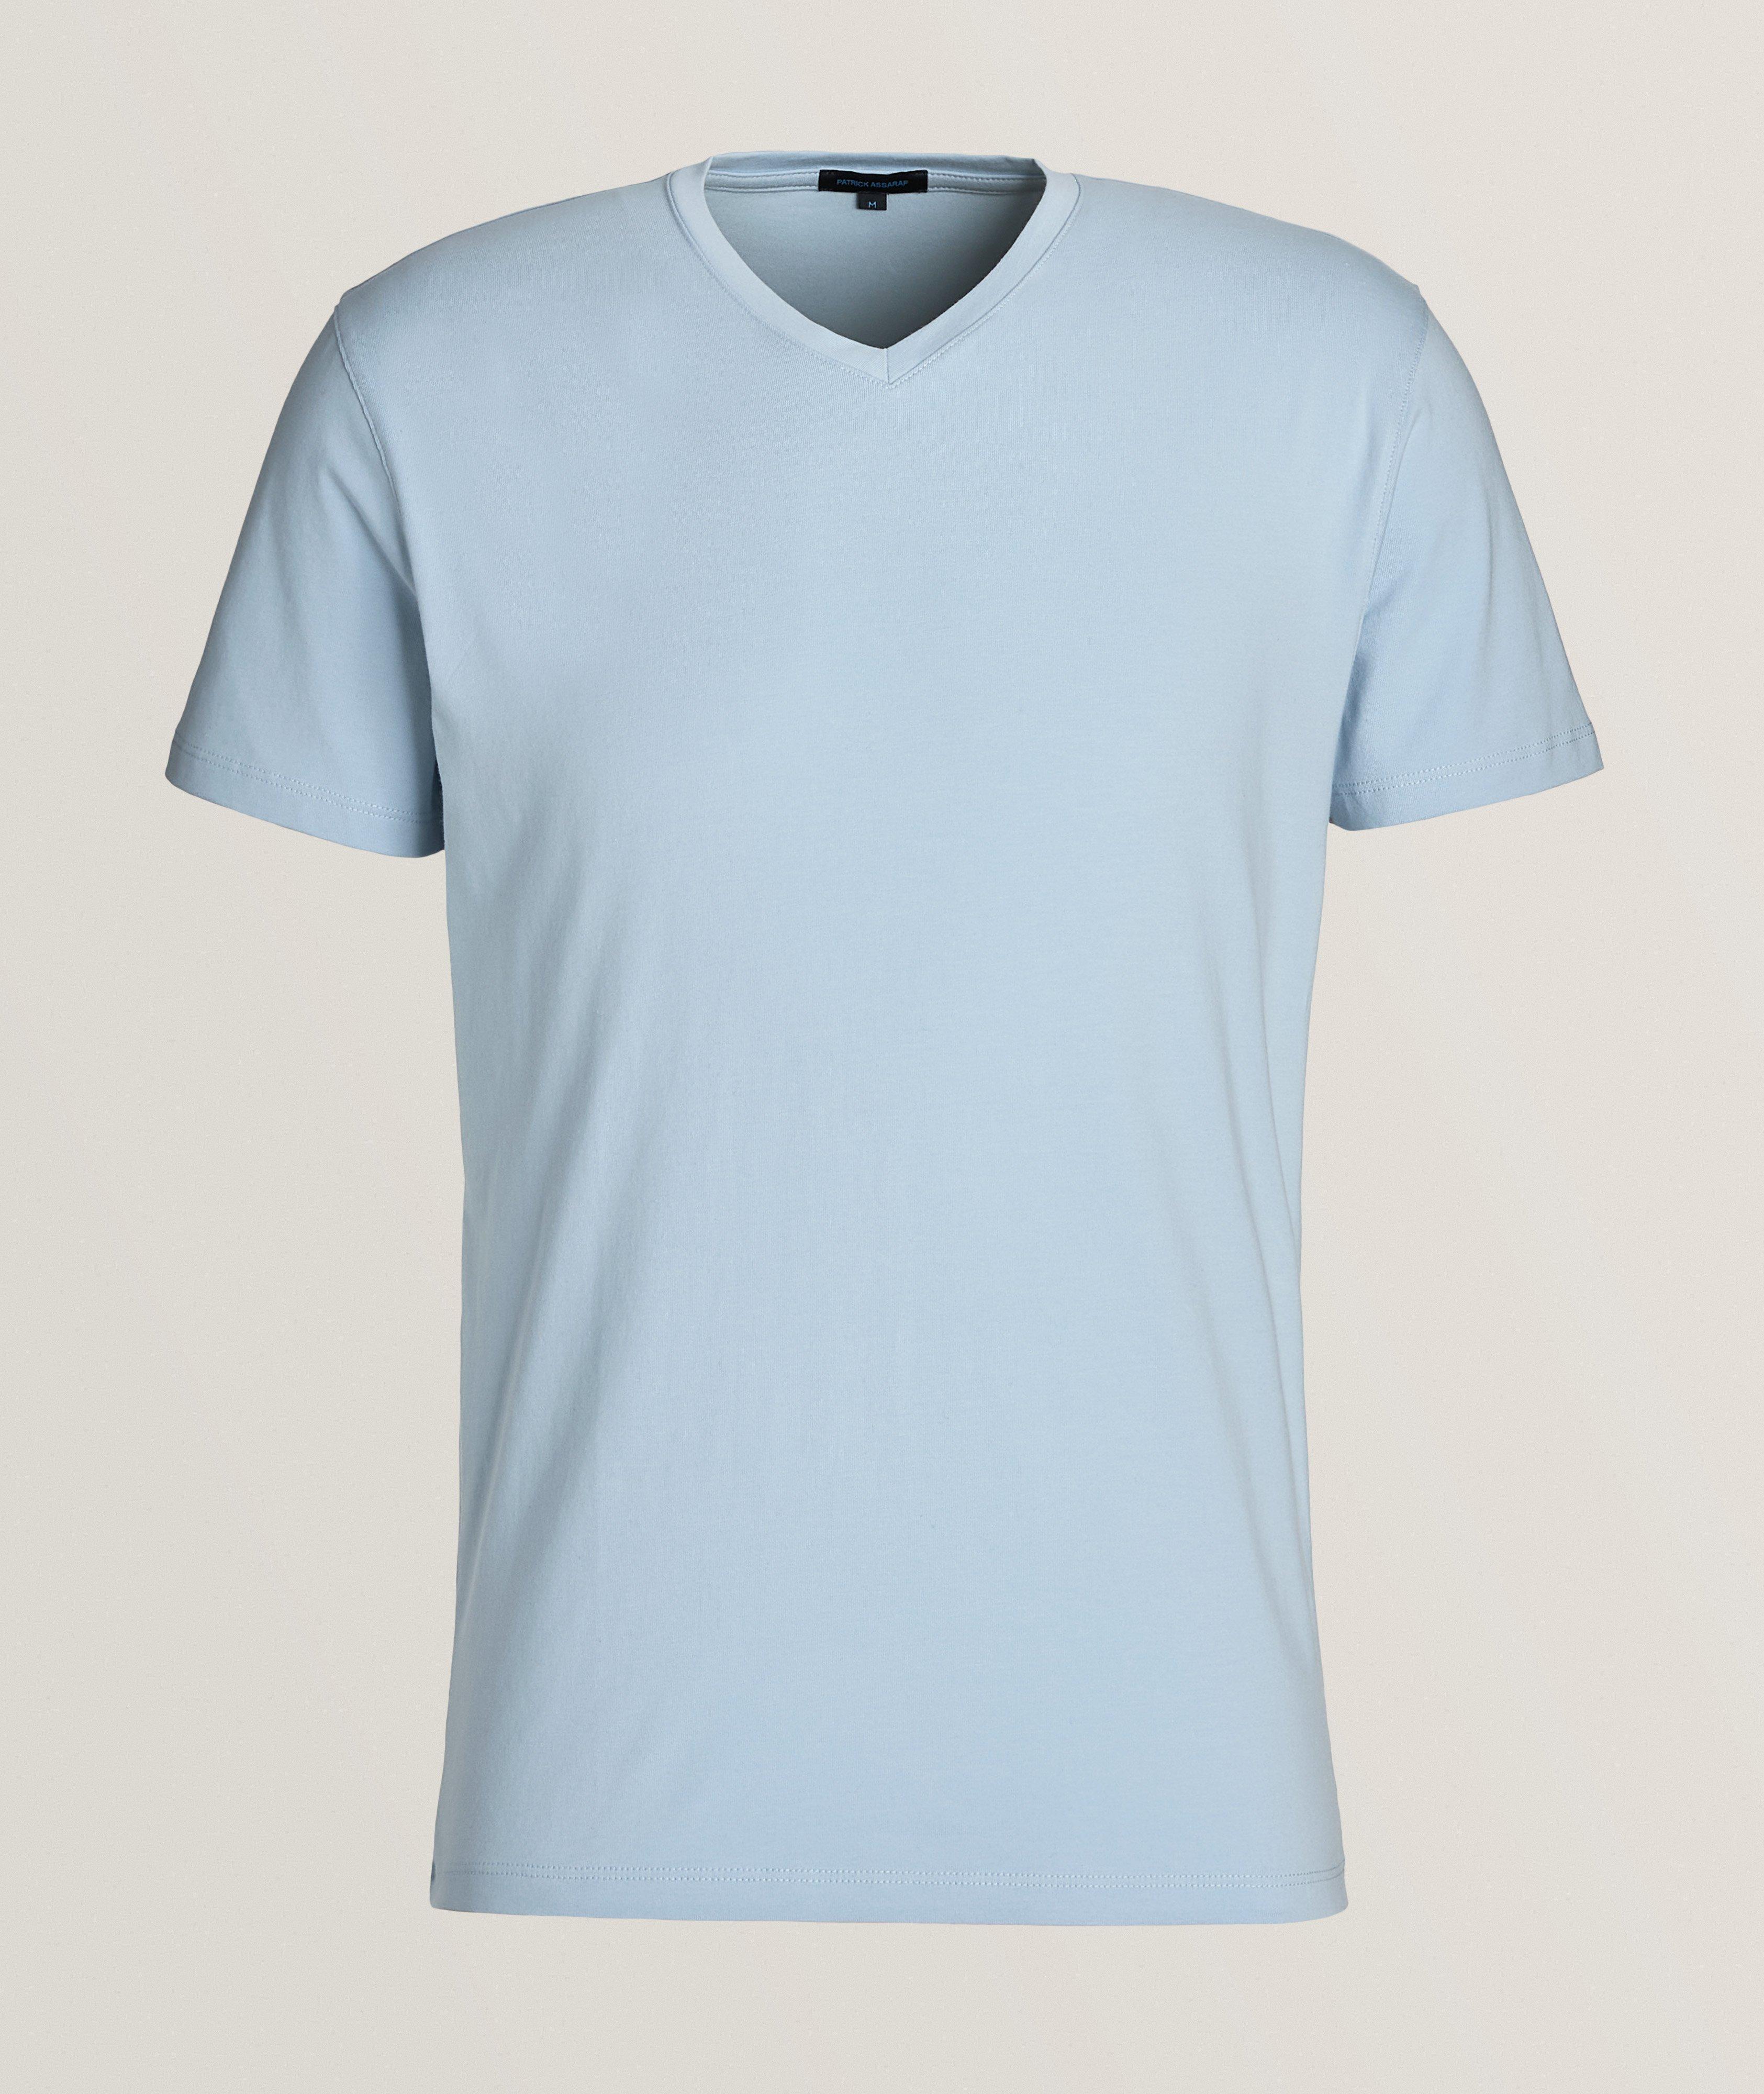 Solid Pima Cotton-Stretch V-Neck T-Shirt image 0